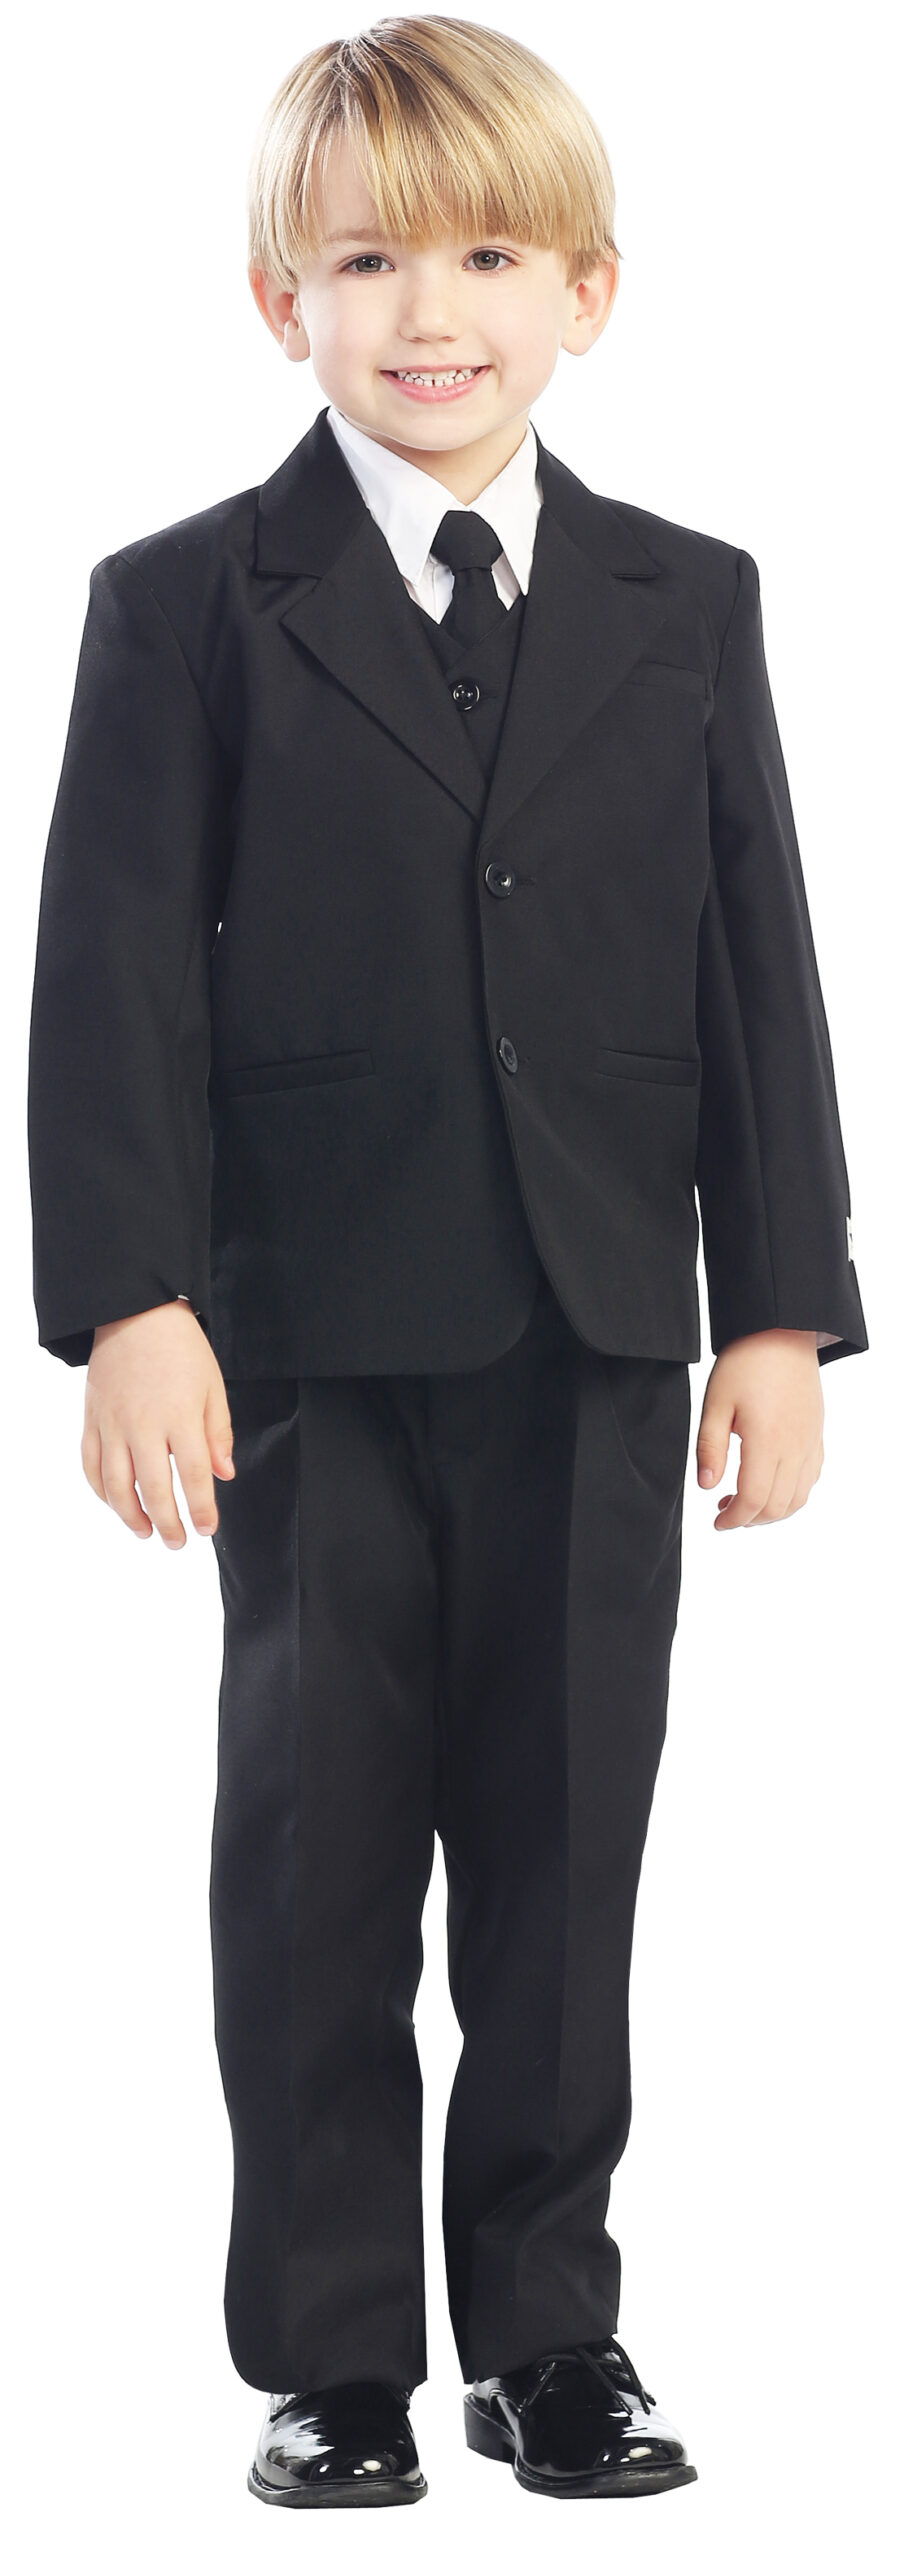 Avery Hill 5-Piece Boy's 2-Button Dress Suit - 6 Colors: Black White Ivory Gray